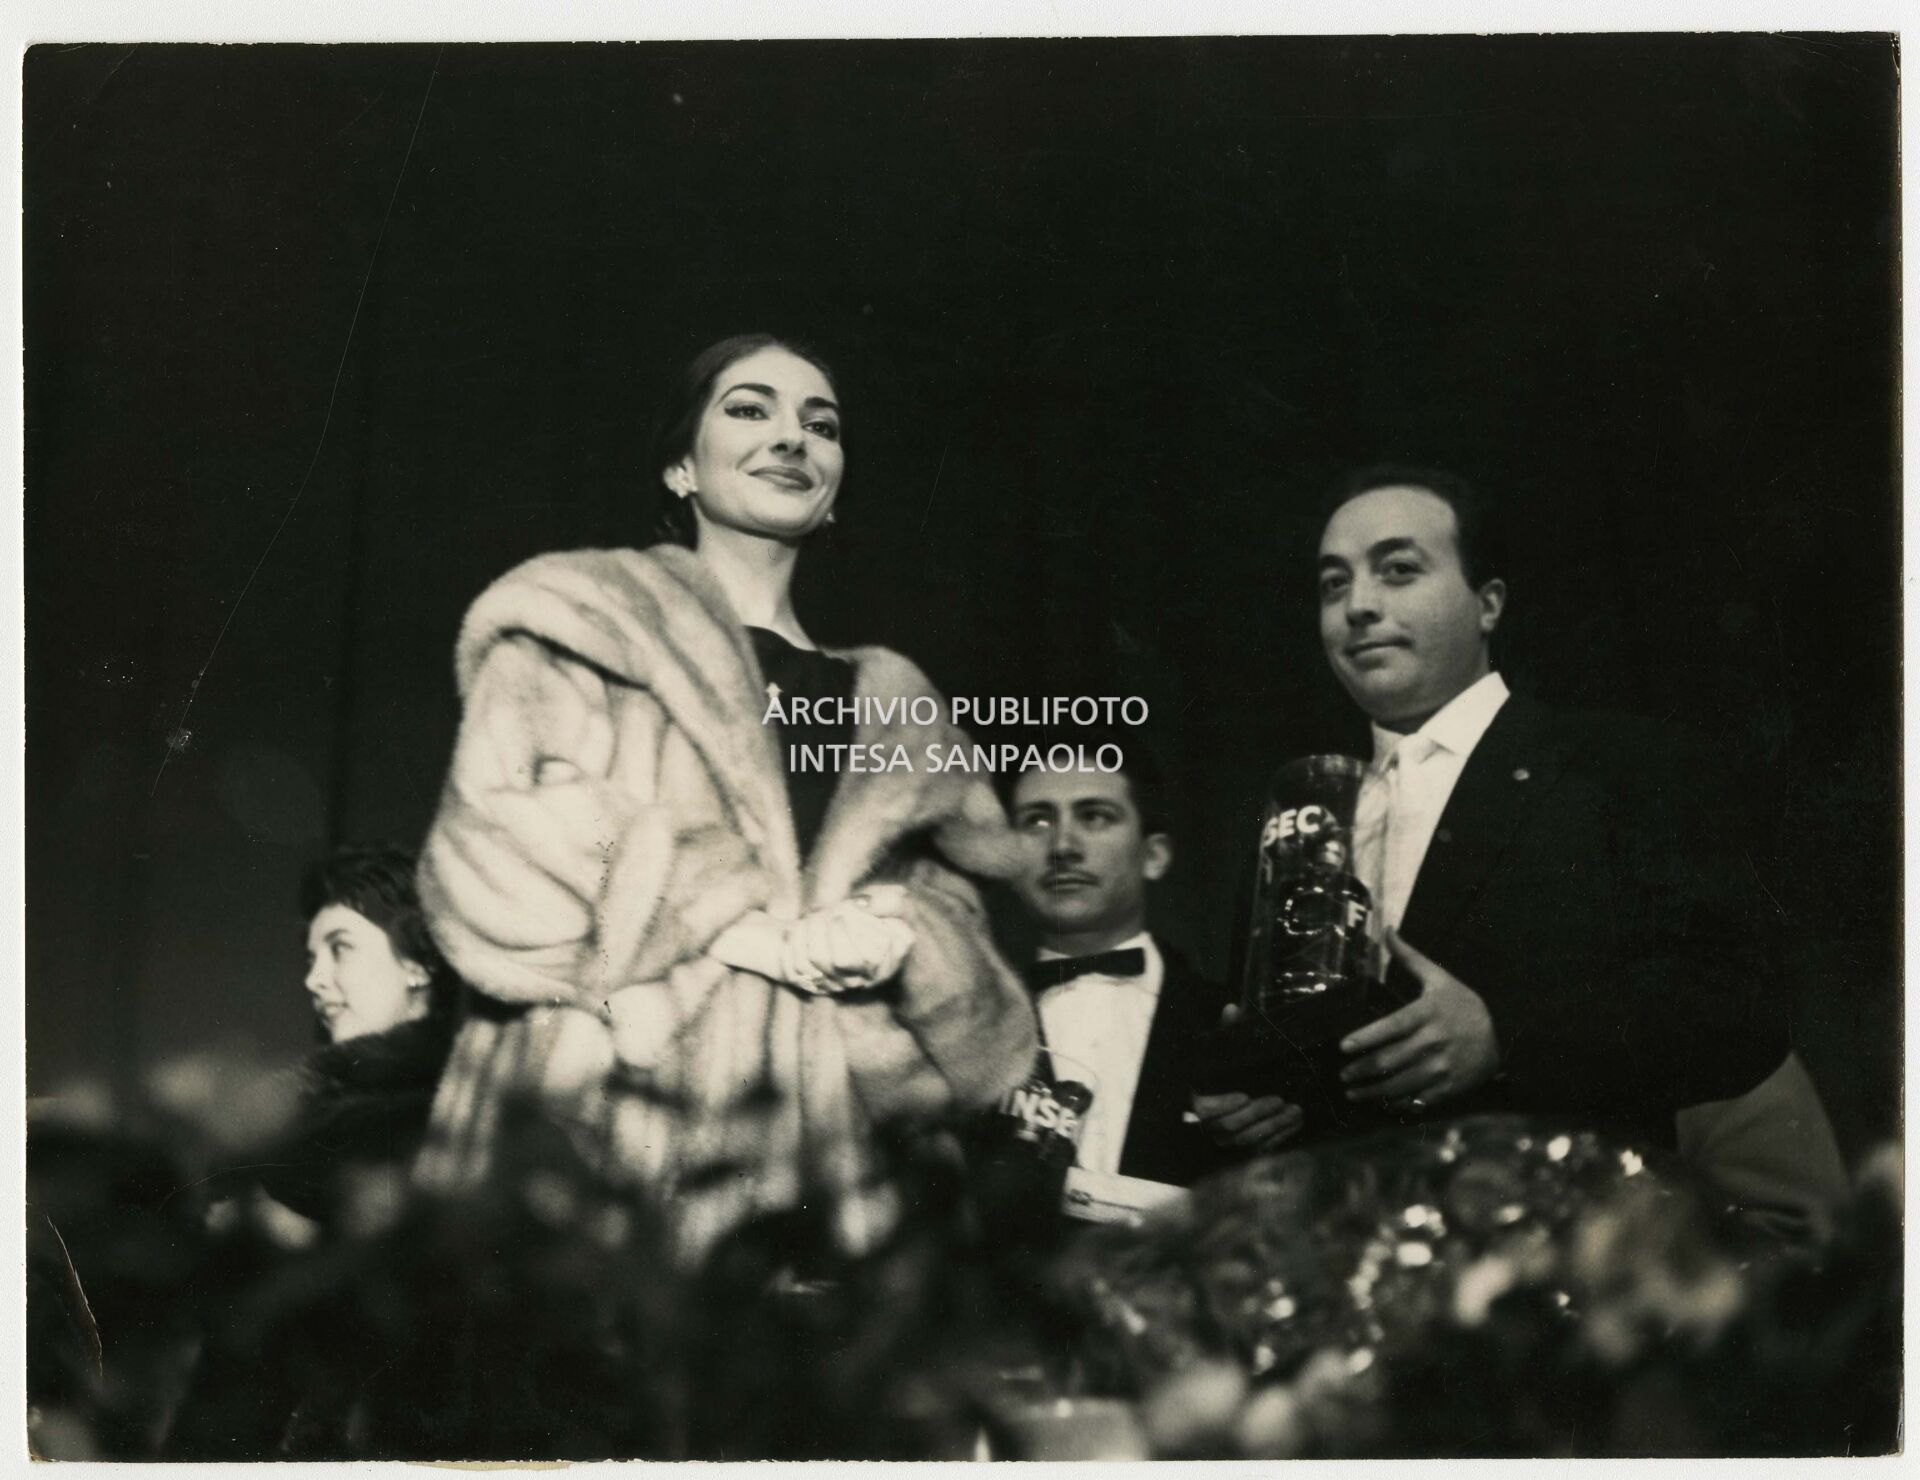 At the Gran Gala della canzone Maria Callas awards the "Guglie d'oro" to the stars of popular music: Gino Latilla in the foreground